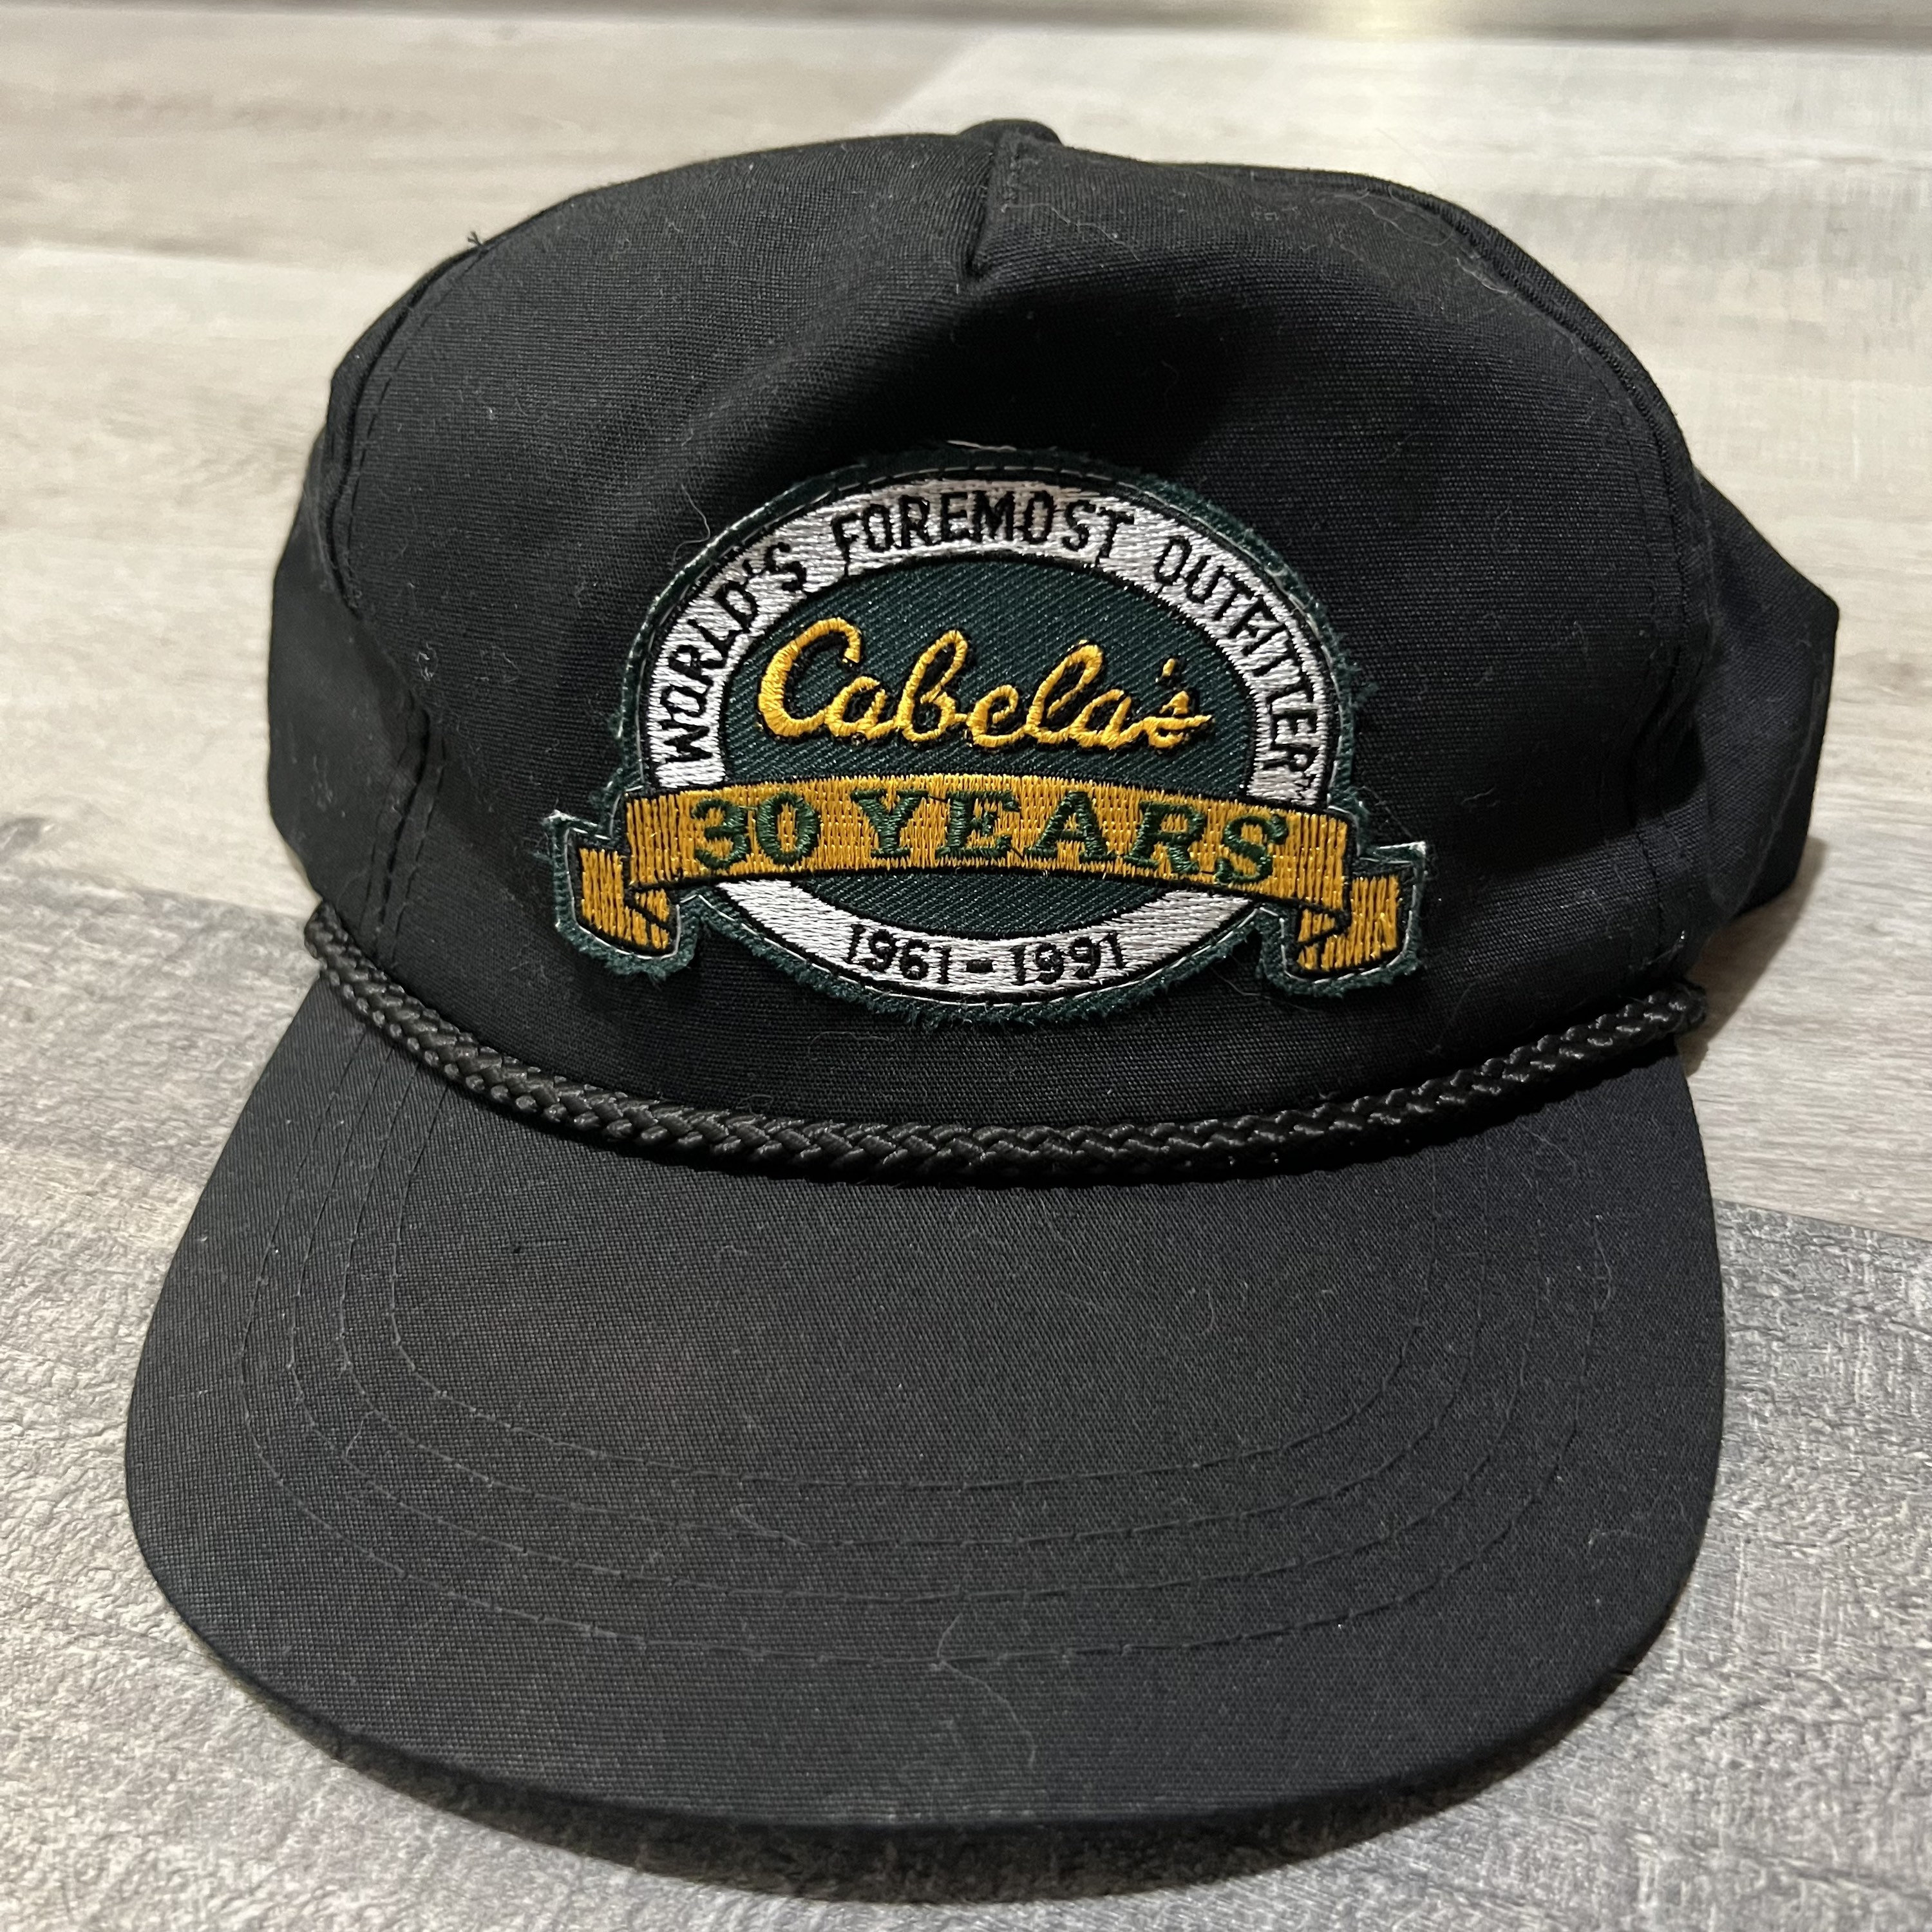 Cabelas Since 1961 Ball Cap Hat Adjustable Baseball